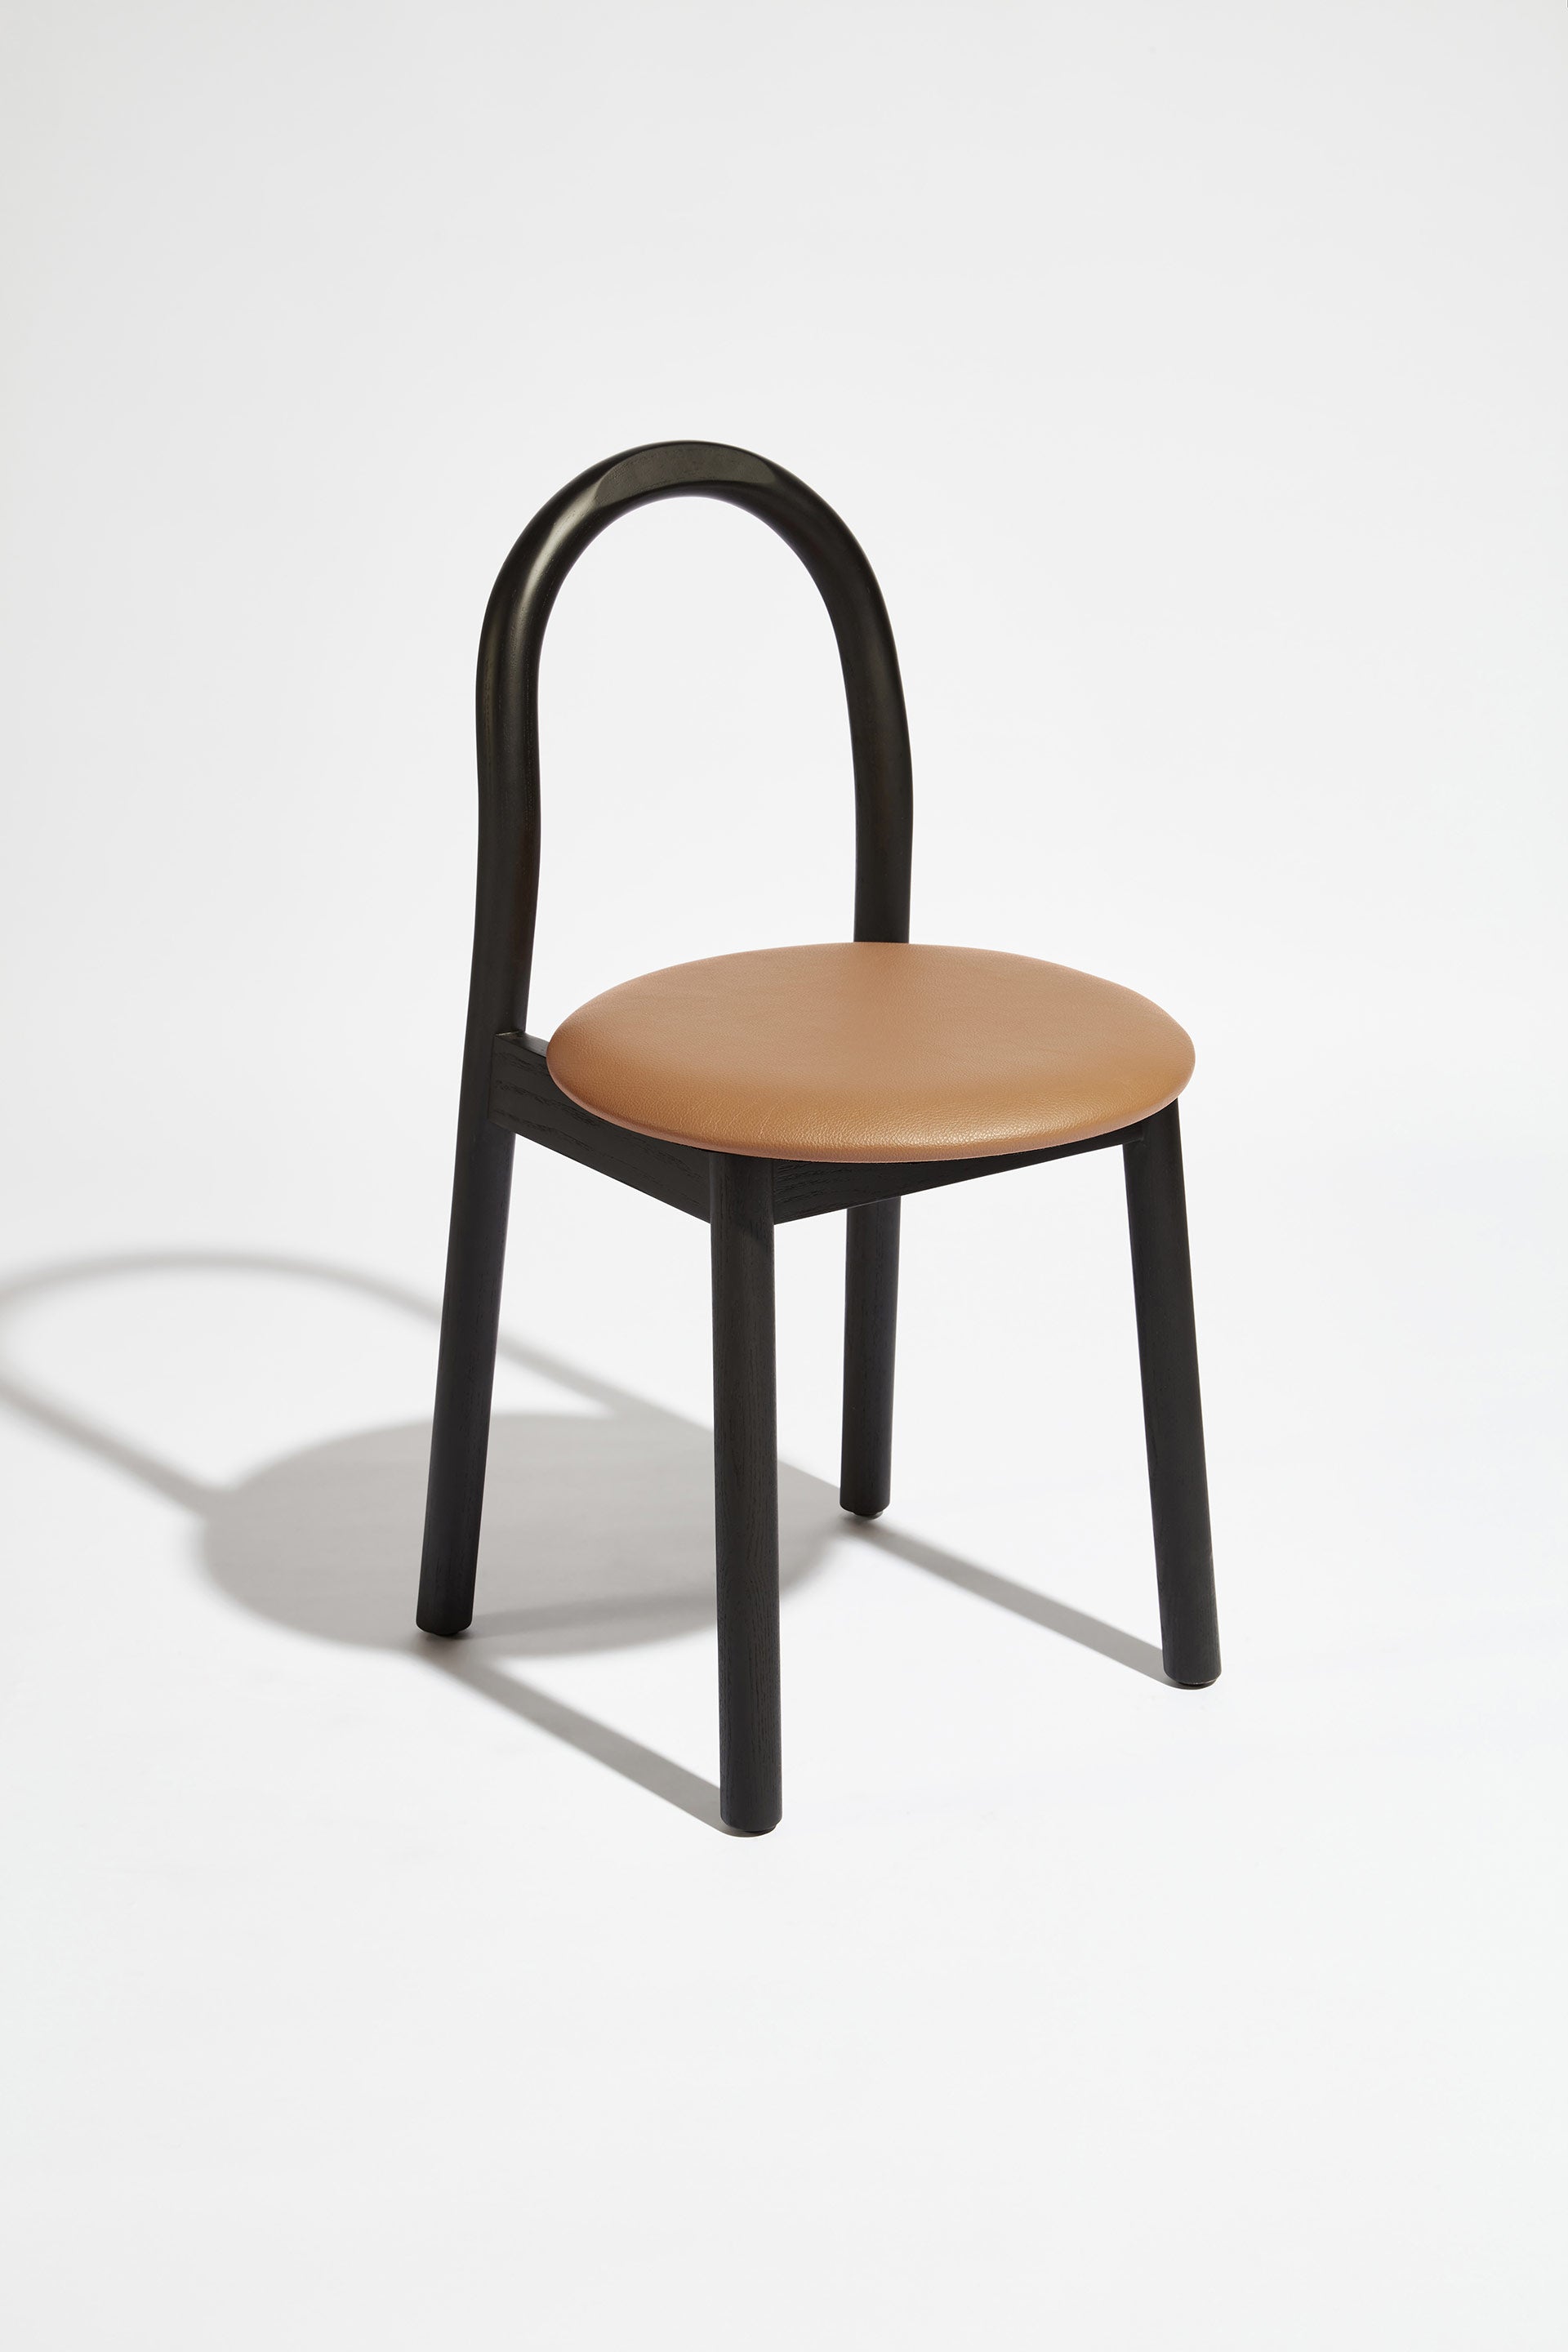 Bobby Chair Upholstered | Black Timber Wooden Dining Chair | Daniel Tucker | DesignByThem ** HF2 Lariat - 001 Camel or HL1 Primary - Saddle / Black Stained Ash